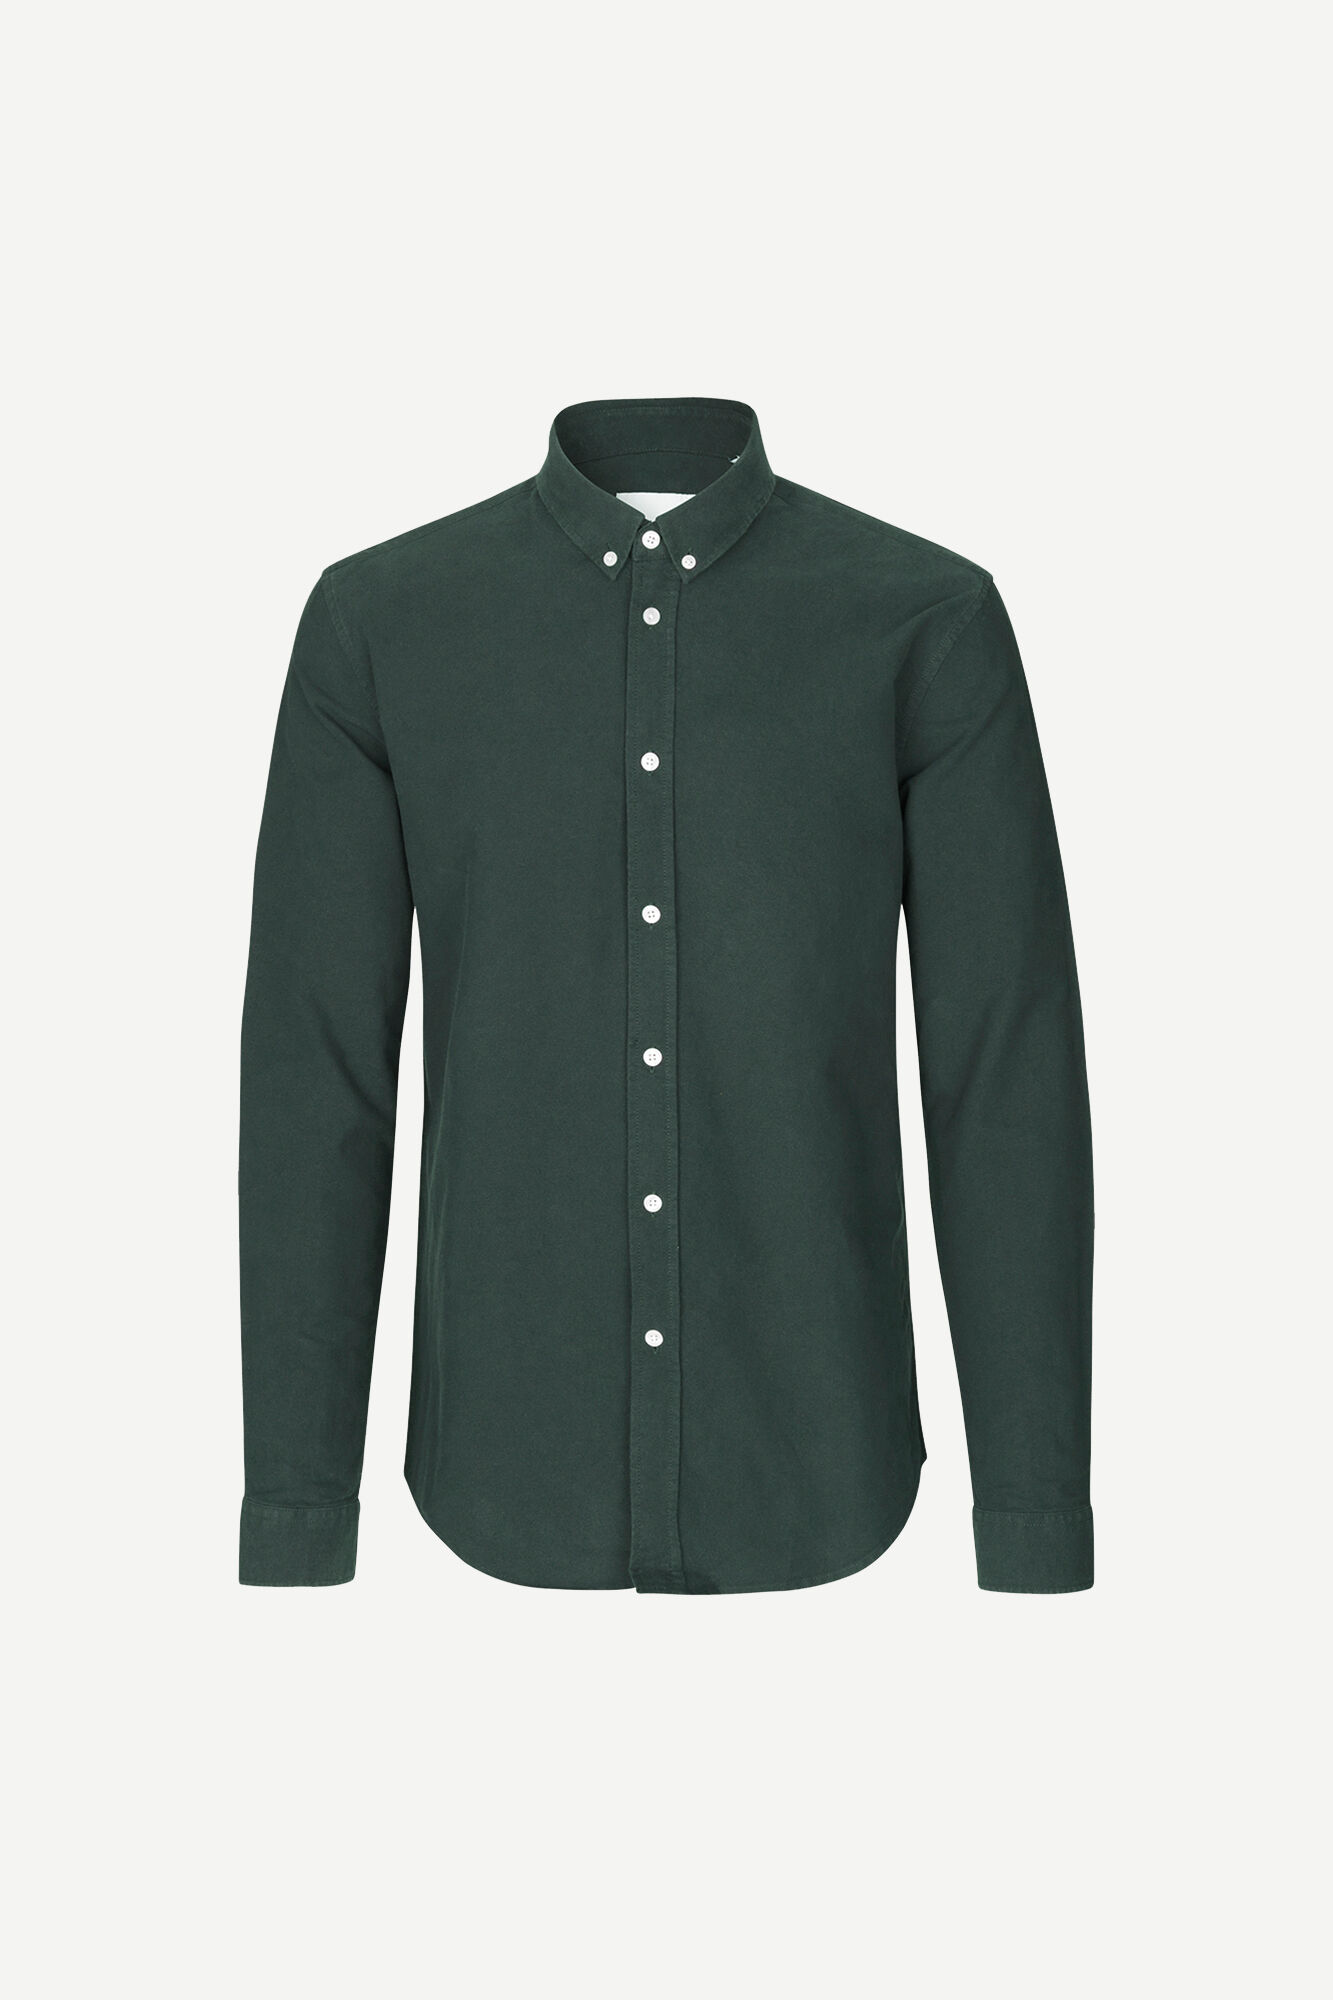 for Men Mens Clothing Shirts Casual shirts and button-up shirts Blue Samsøe & Samsøe Flannel Shirt in Deep Jade 